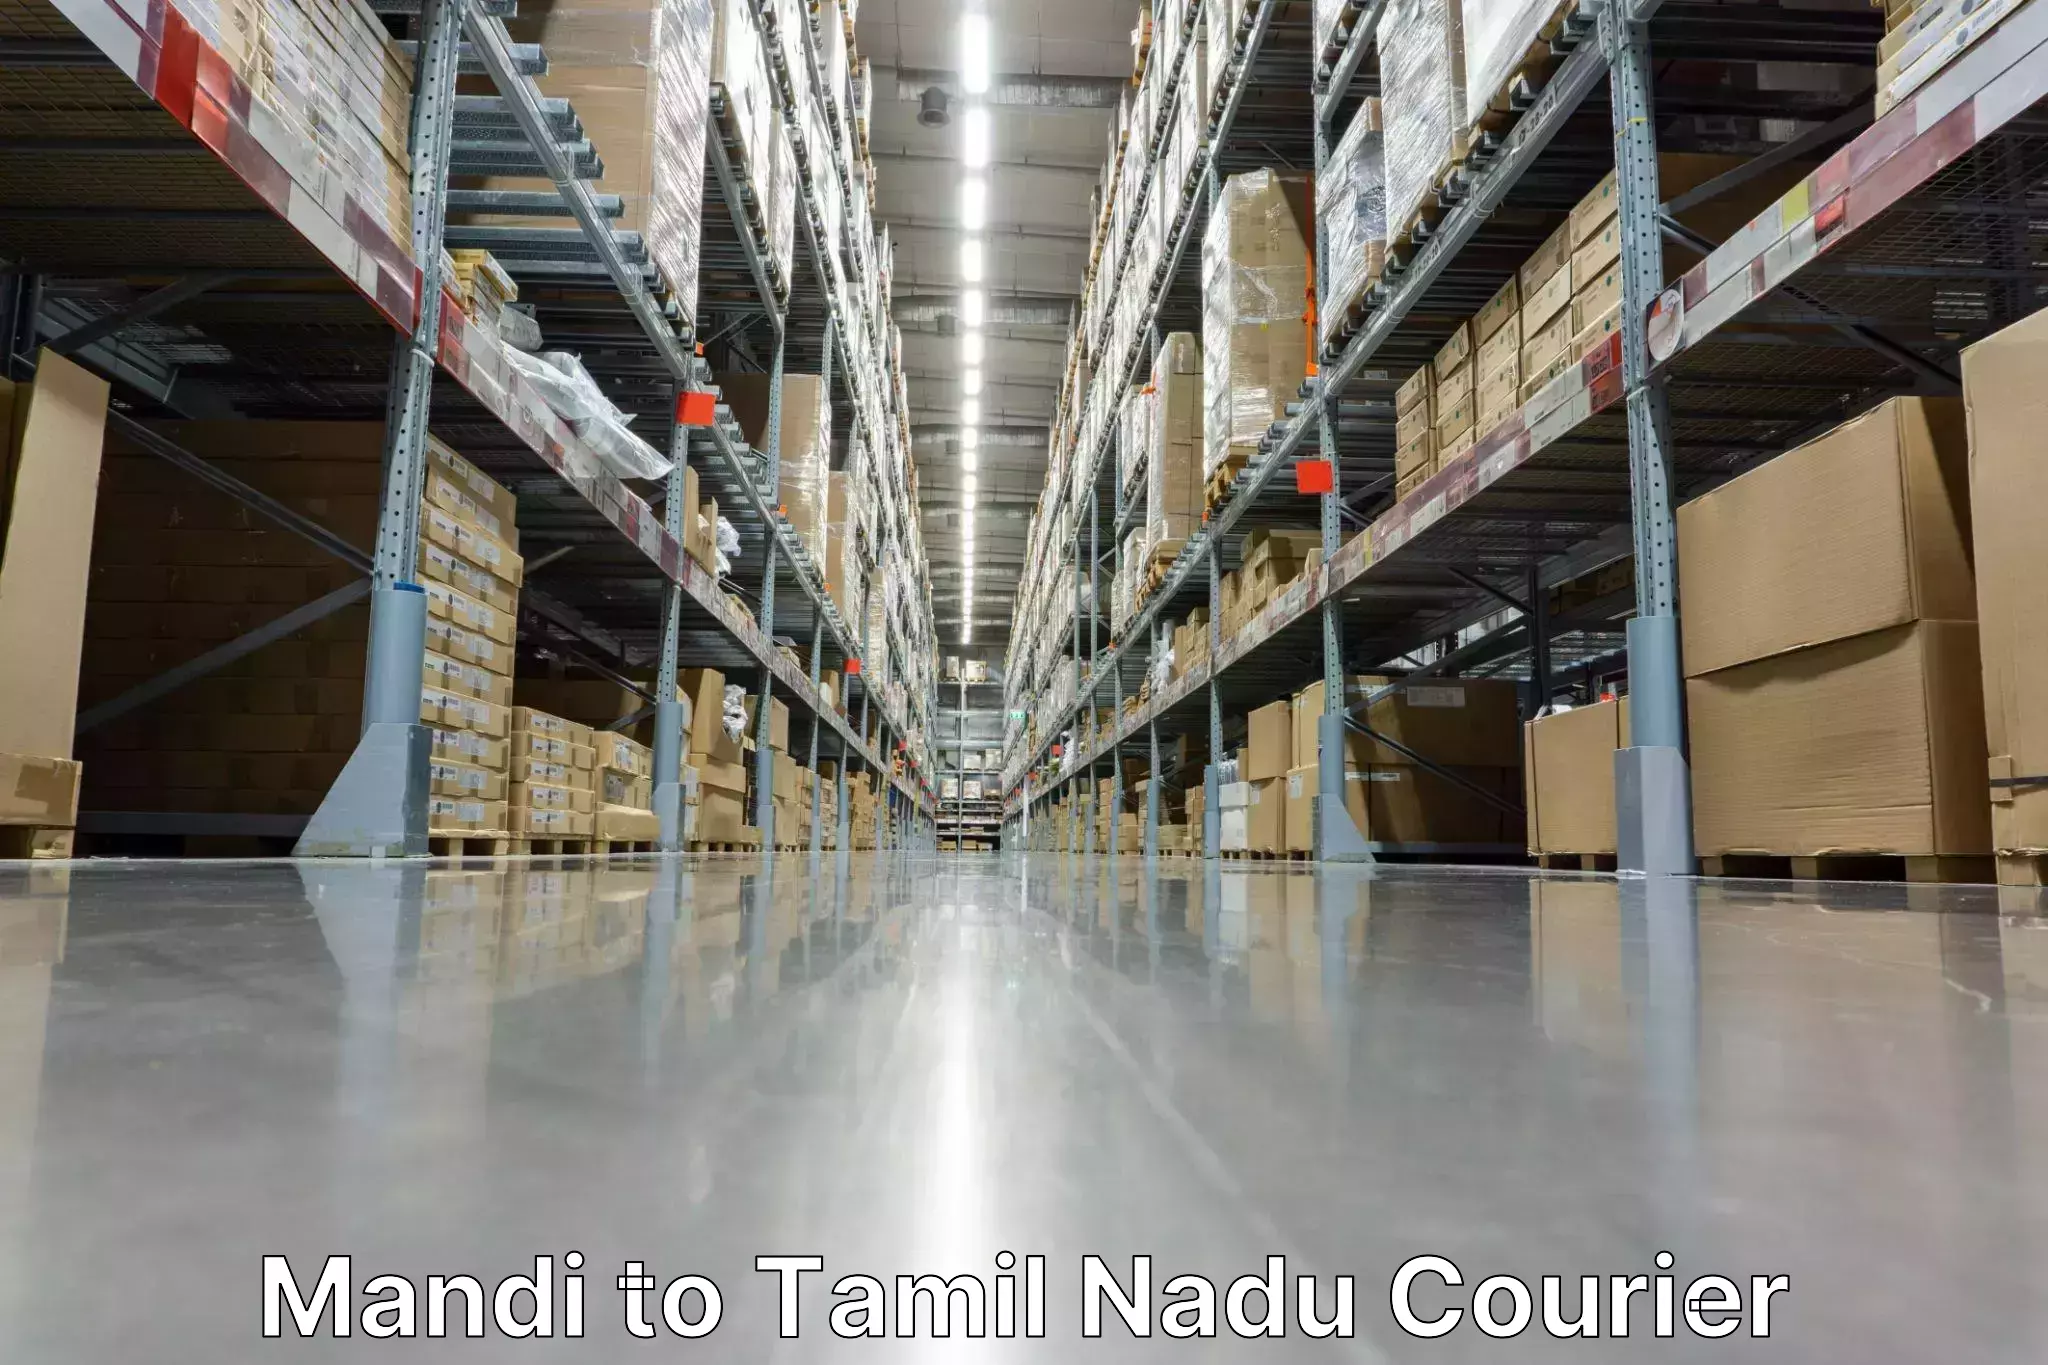 Speedy delivery service Mandi to Tamil Nadu